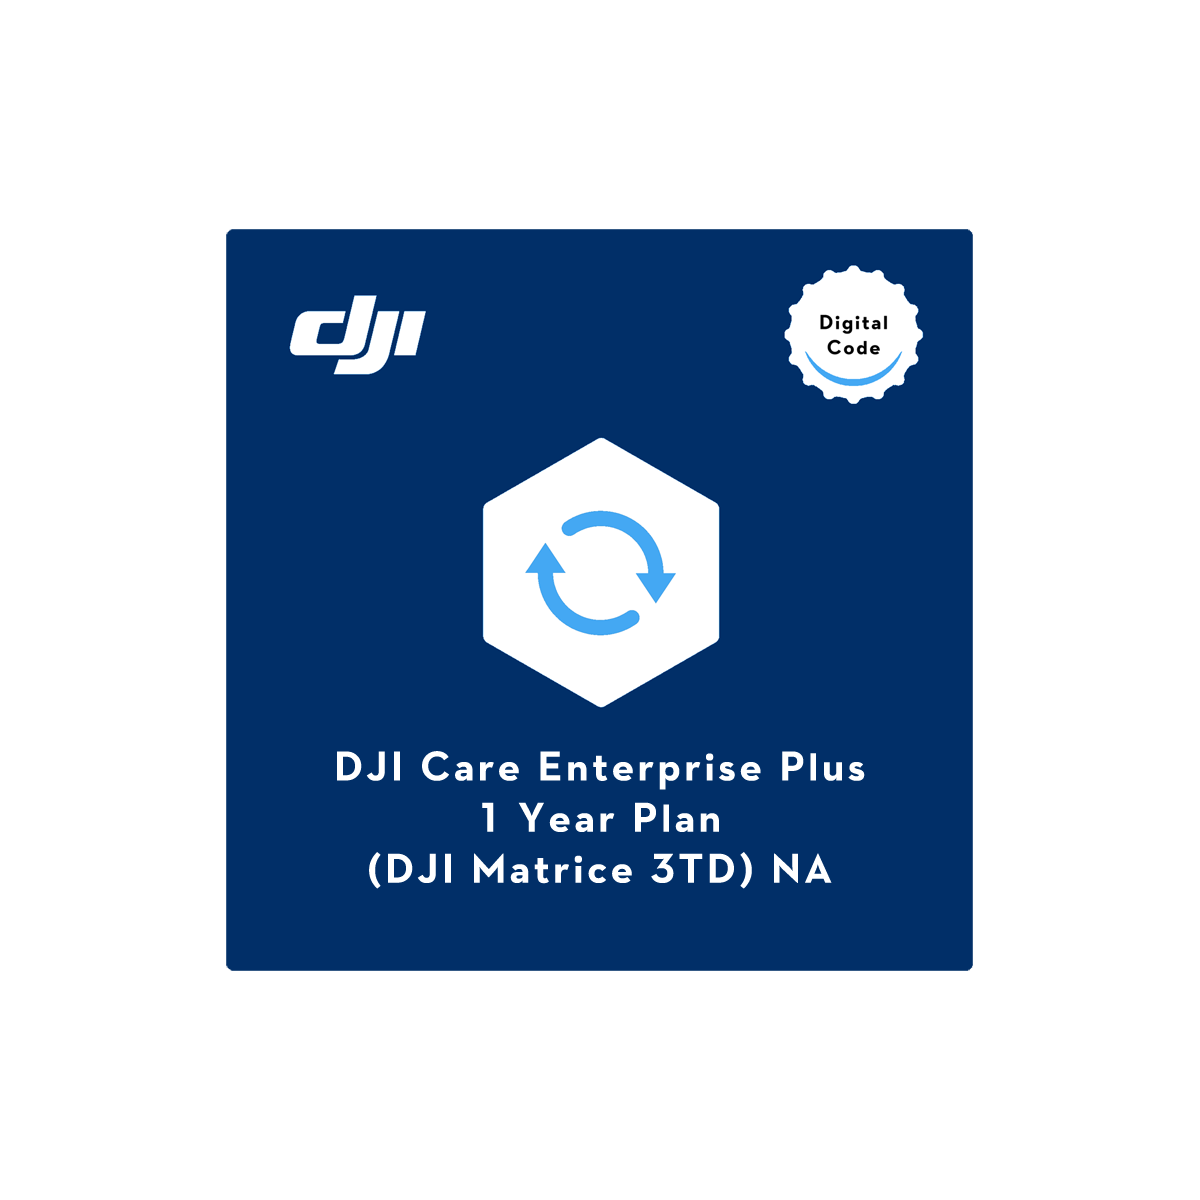 DJI Care Enterprise Plus (DJI Matrice 3TD) NA